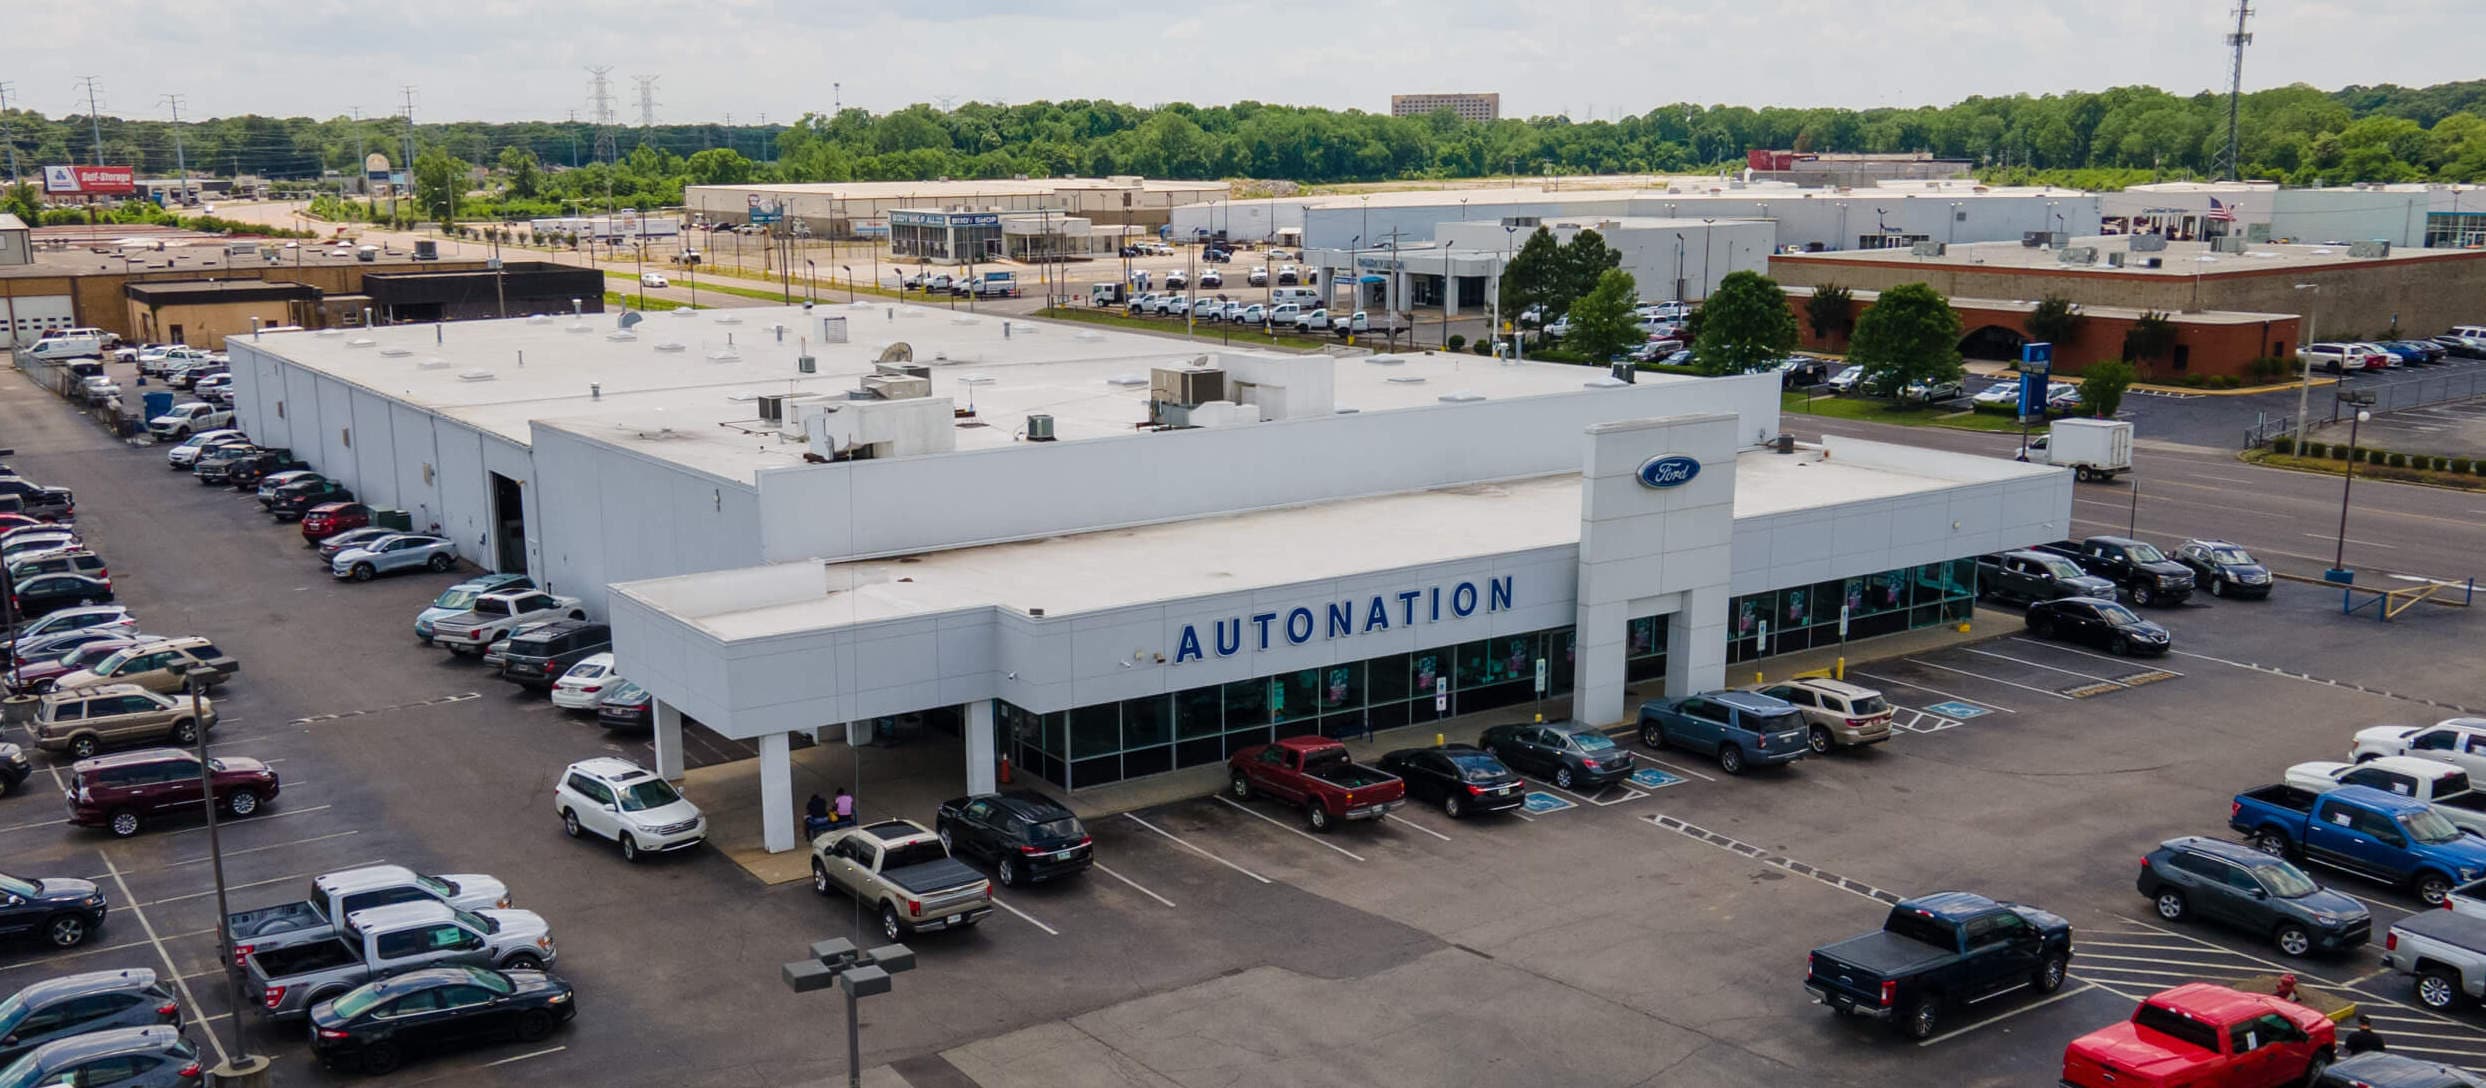 Autonation Ford exterior building